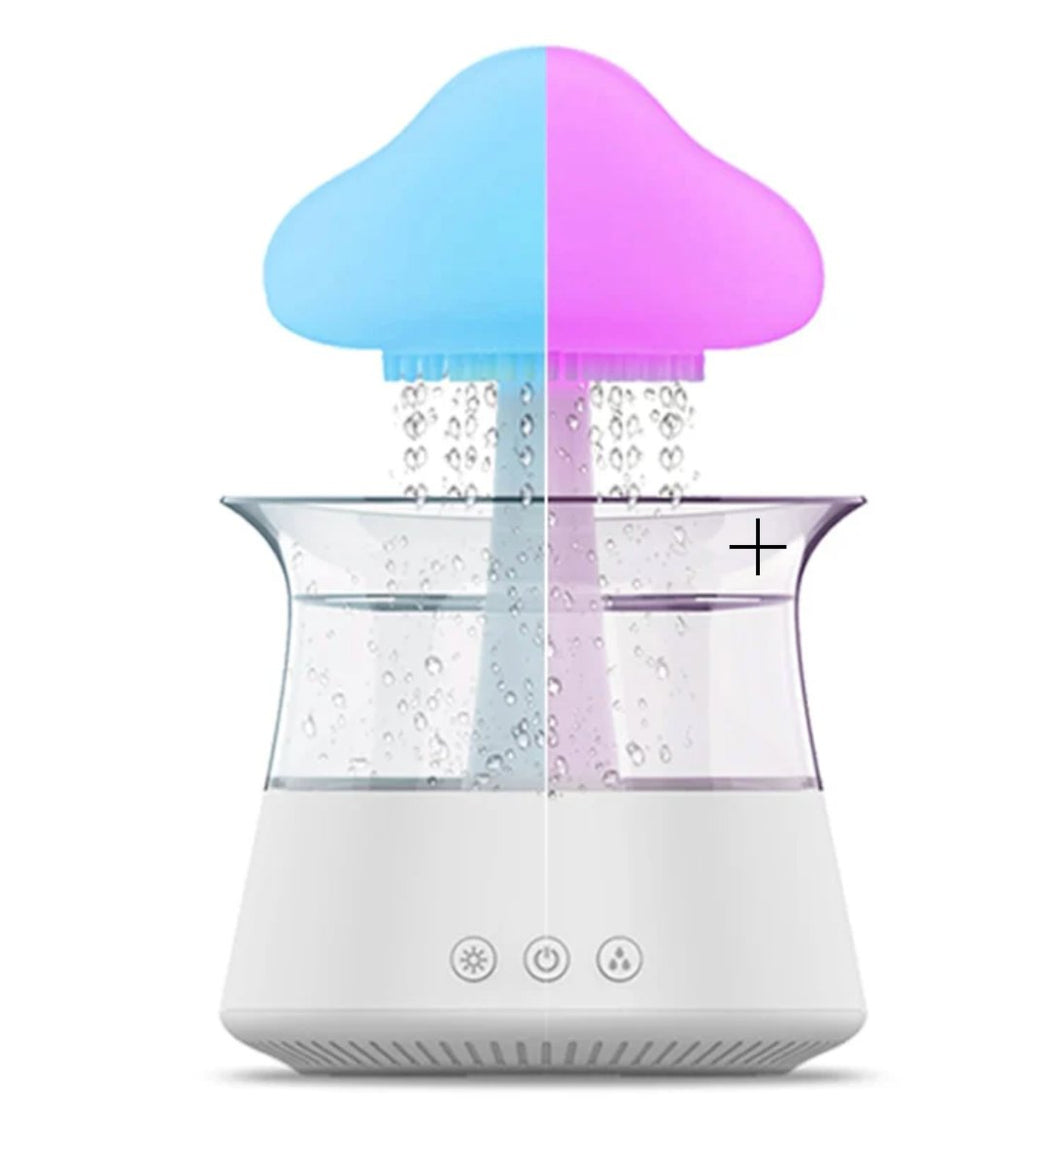 Rain Cloud Night Light Humidifier Diffuser tekshop.no